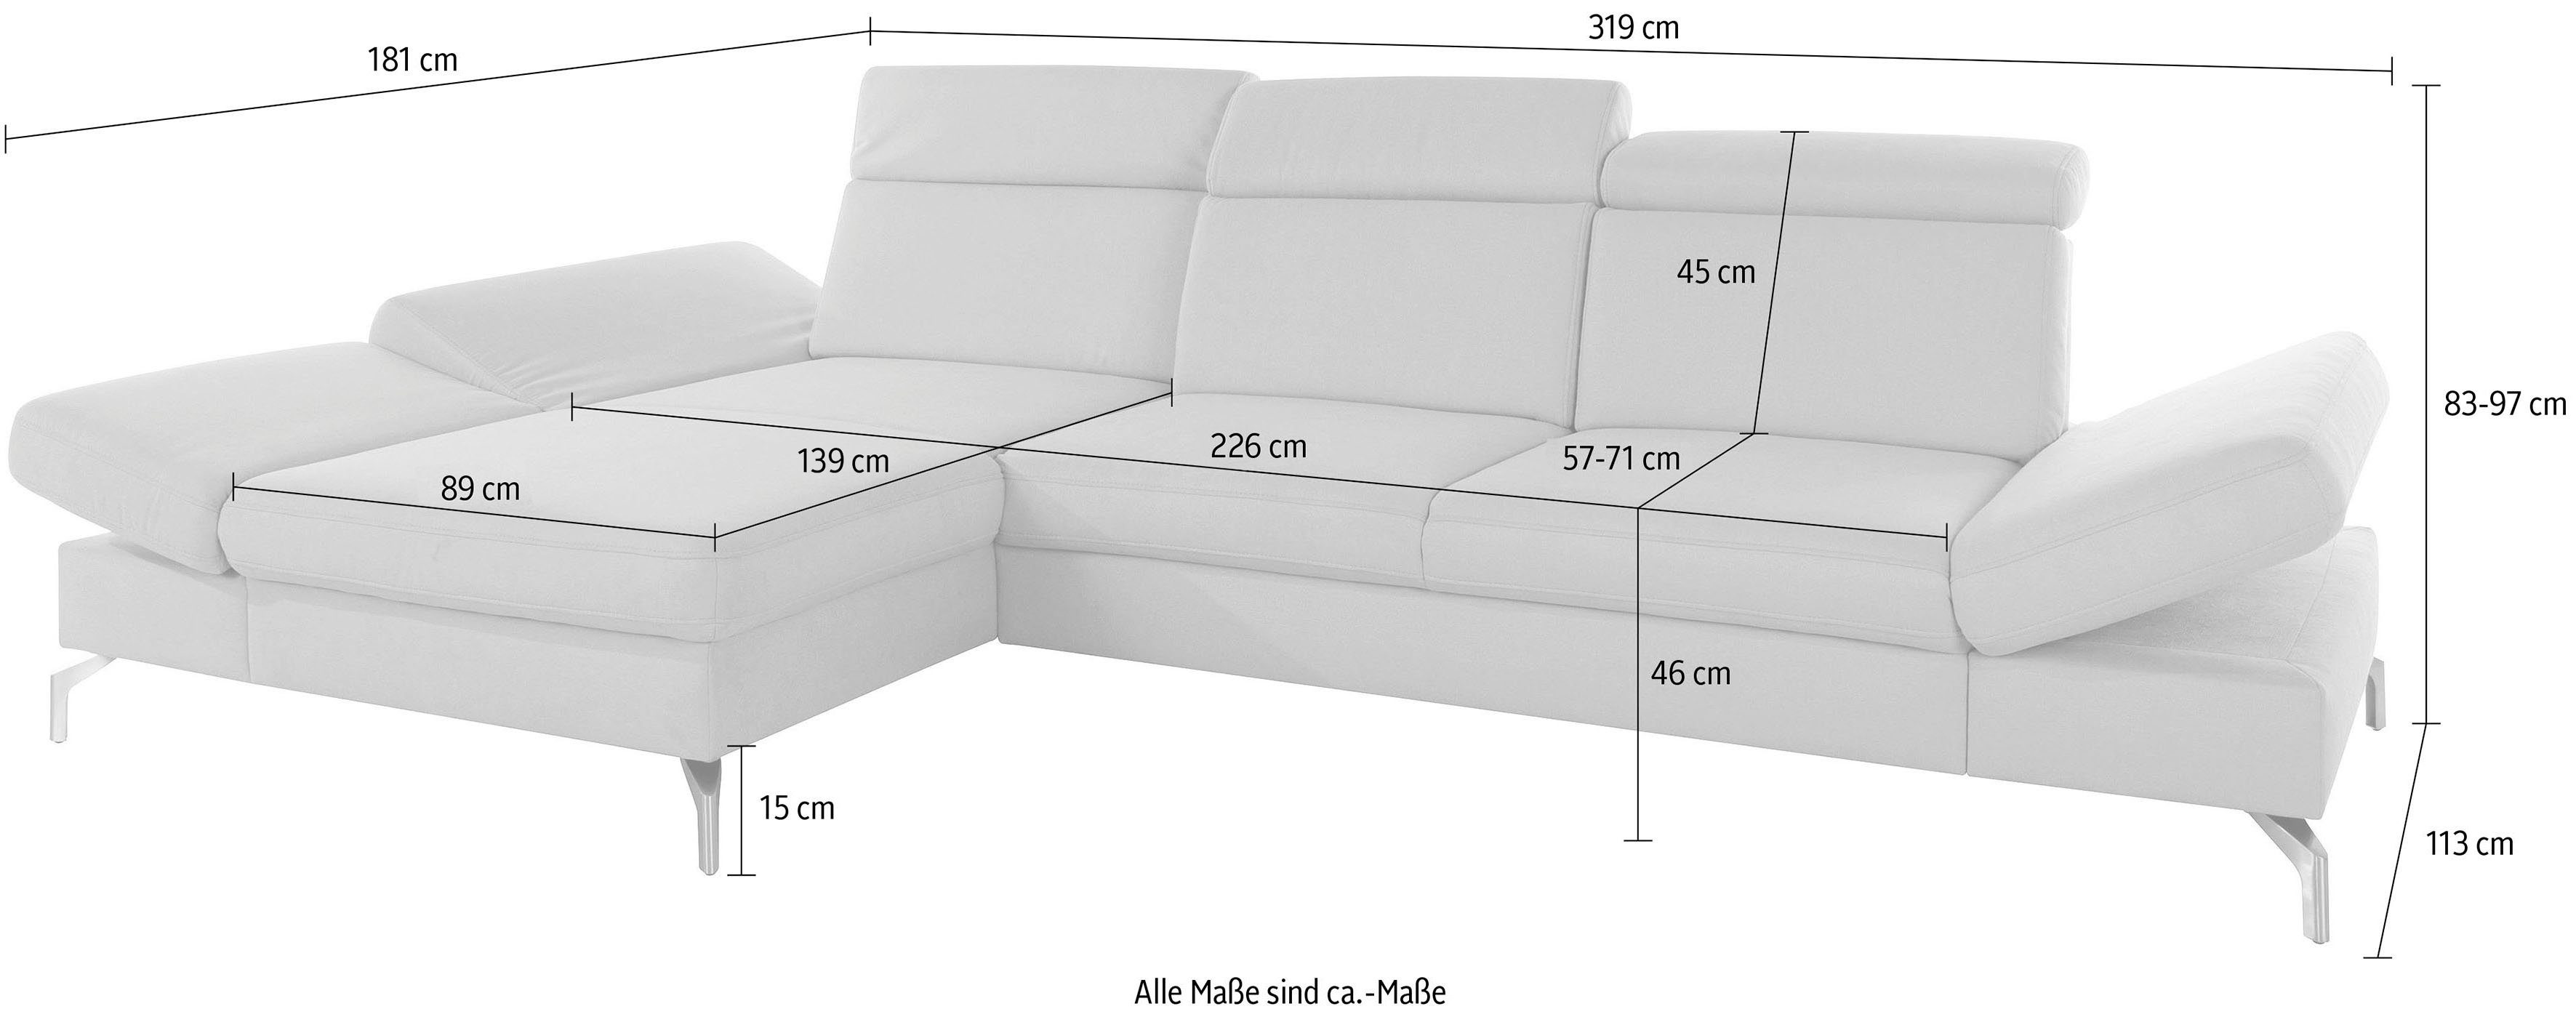 sit&more Hoekbank Poothoogte 15 cm, inclusief verstelbare zitdiepte, armleuningen en hoofdeind